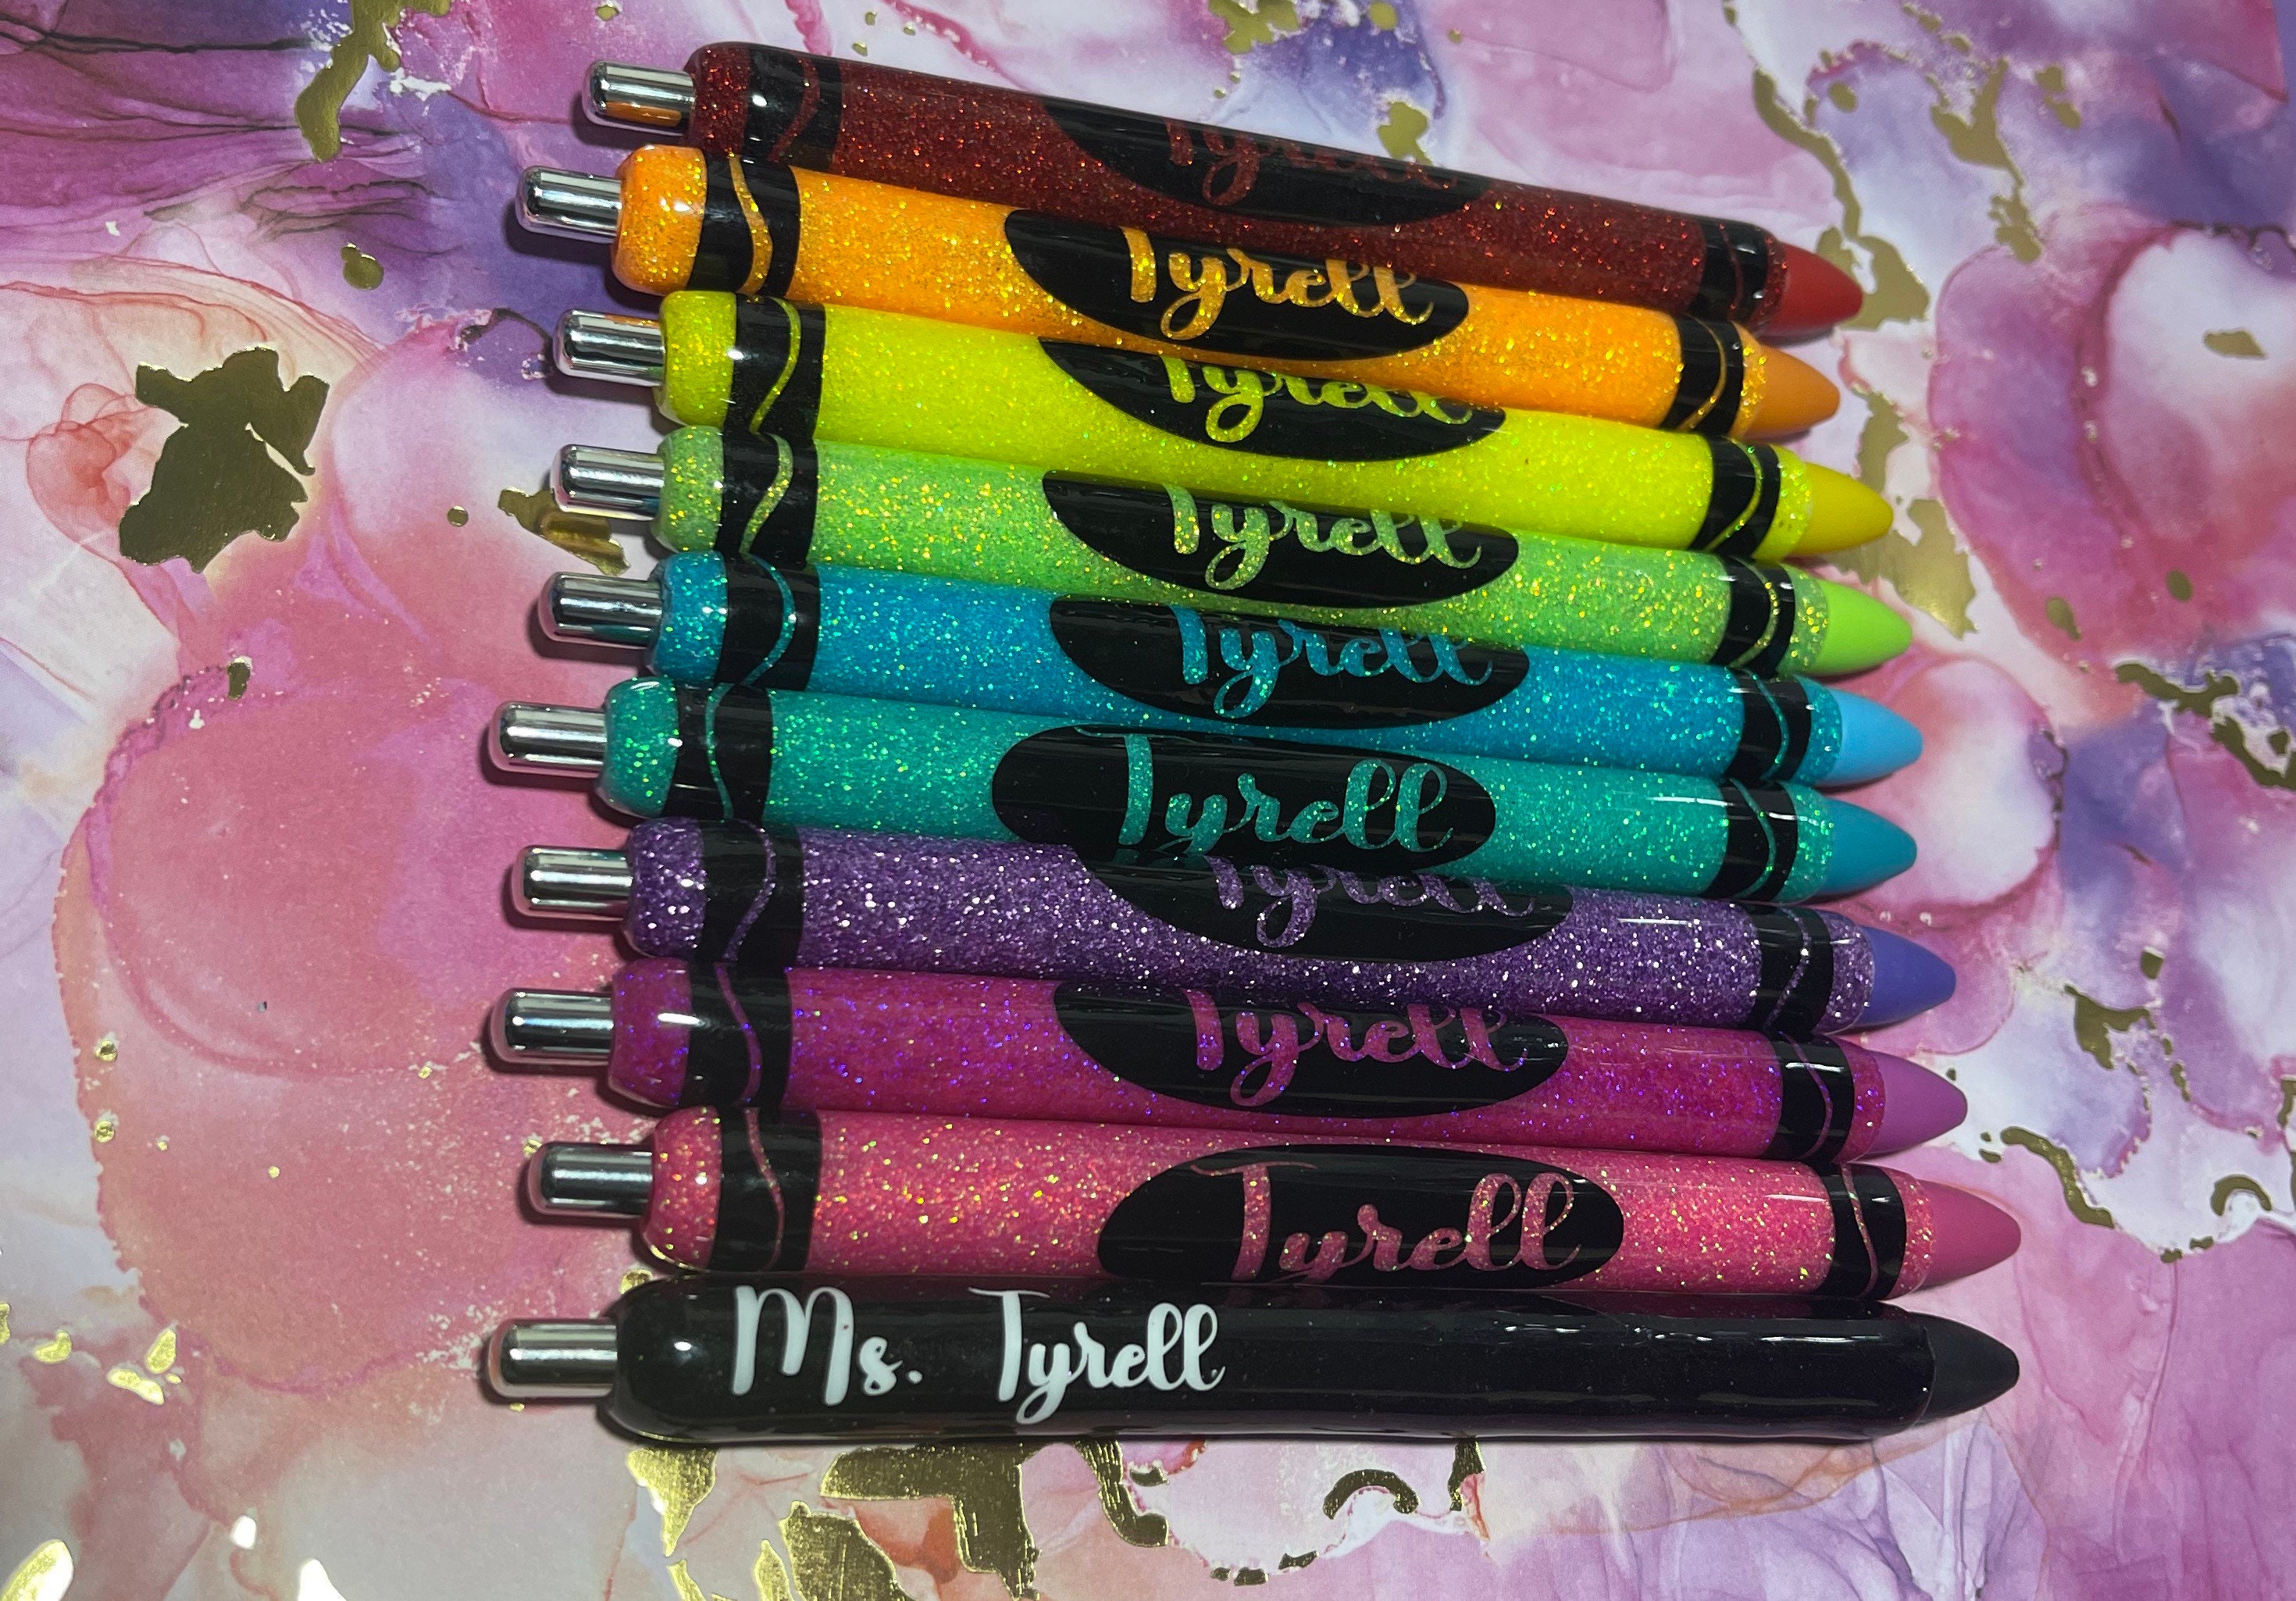 Crayola Glitter Pens